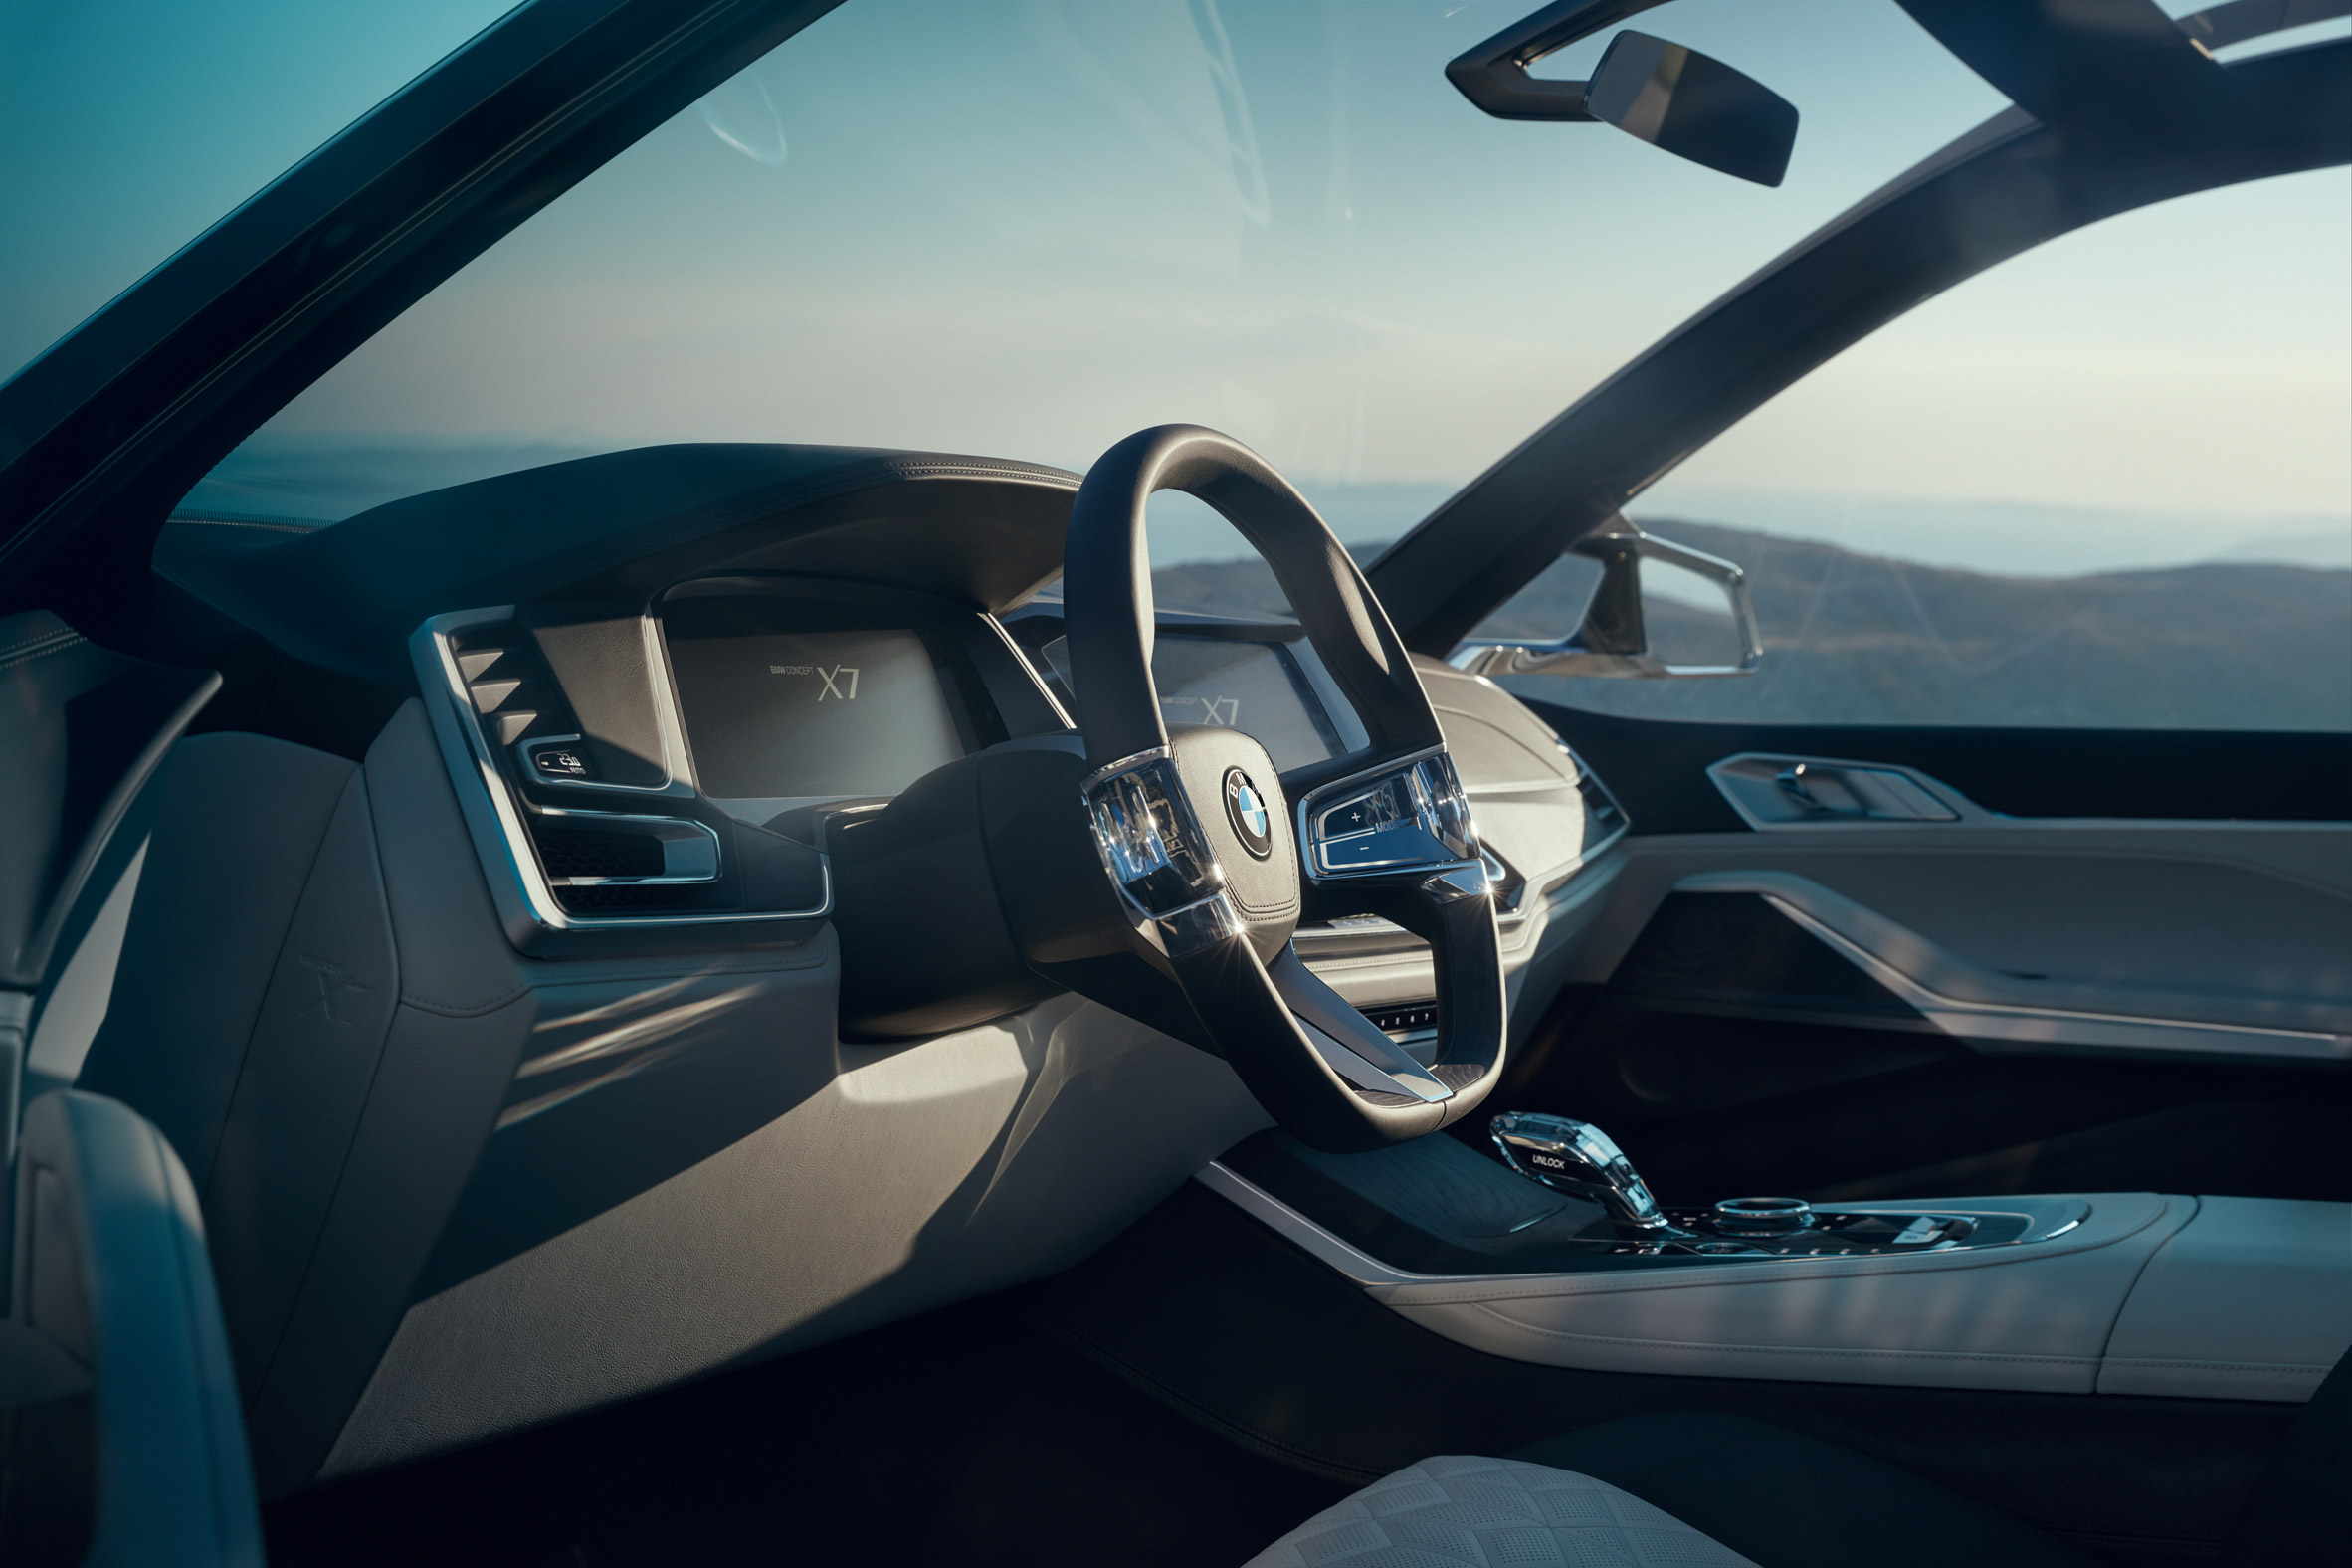 BMW unveils spacious X7 concept car as part of luxury vehicle range-13